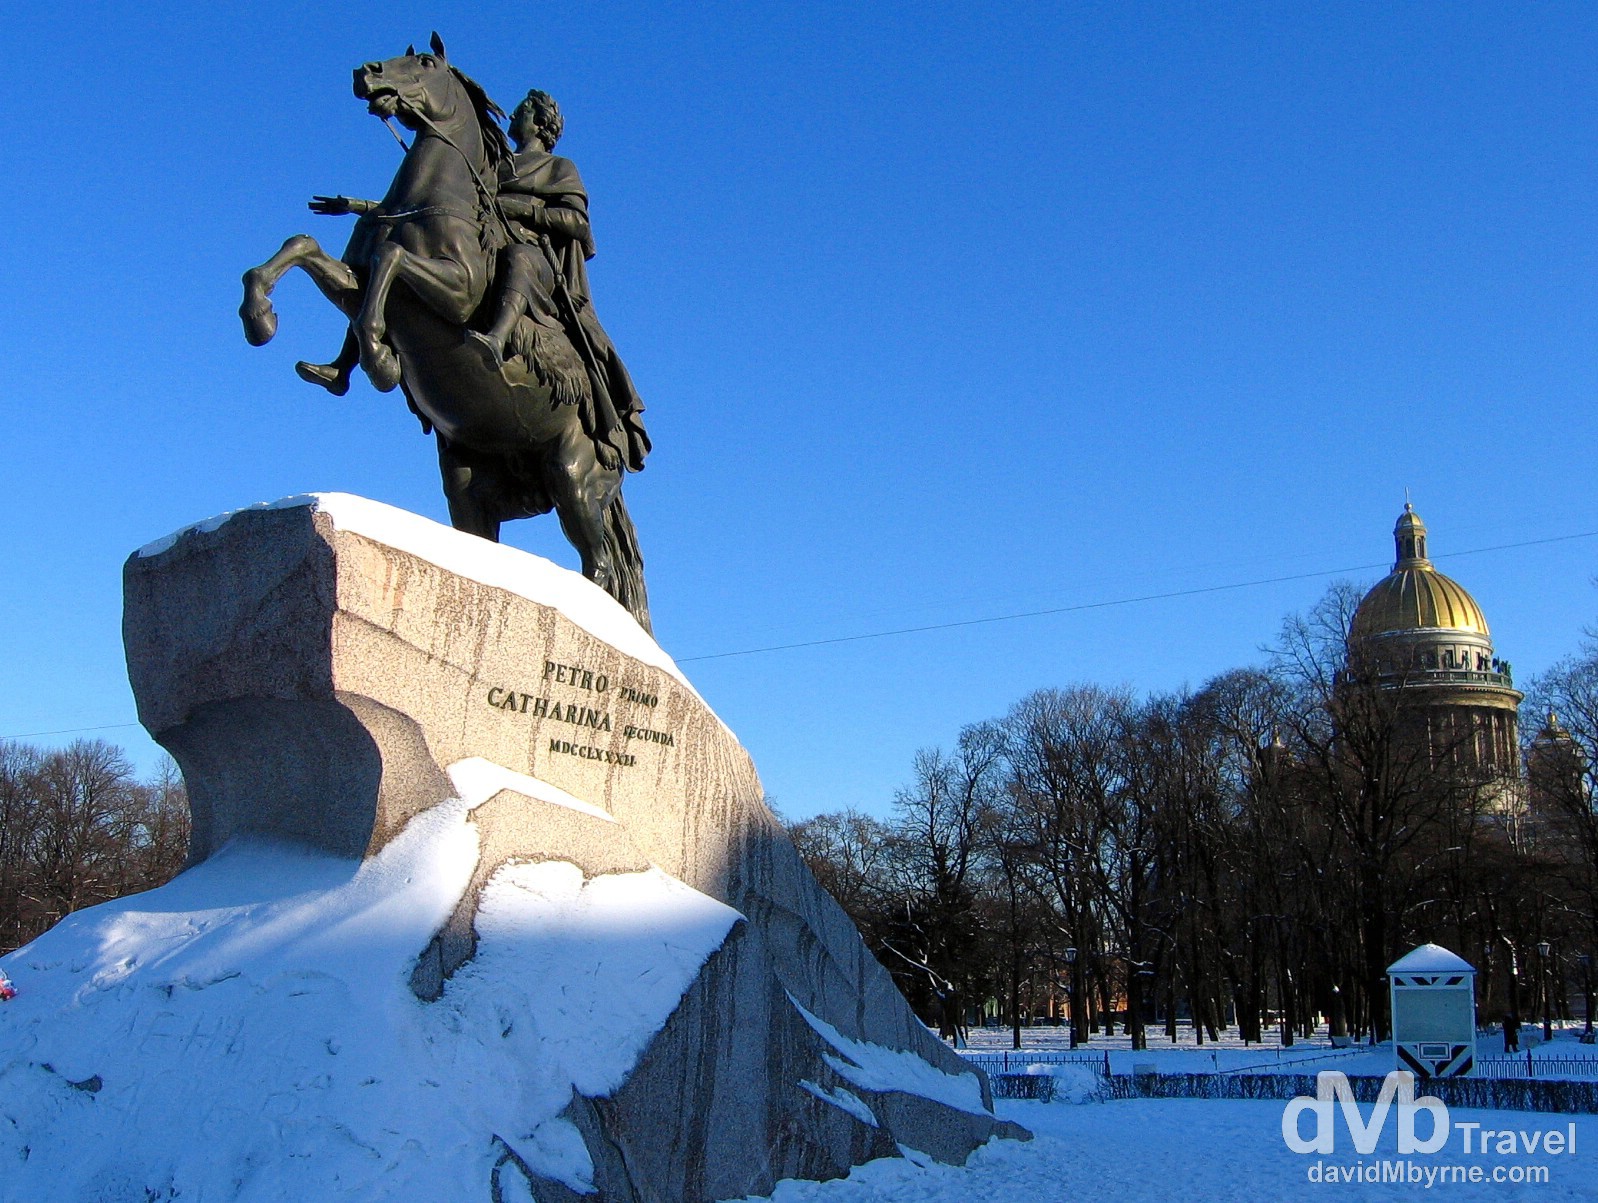 The statue The Bronze Horseman in ploshchad Dekabristov (Decembrists Square) in St Petersburg, Russia. February 27, 2006.